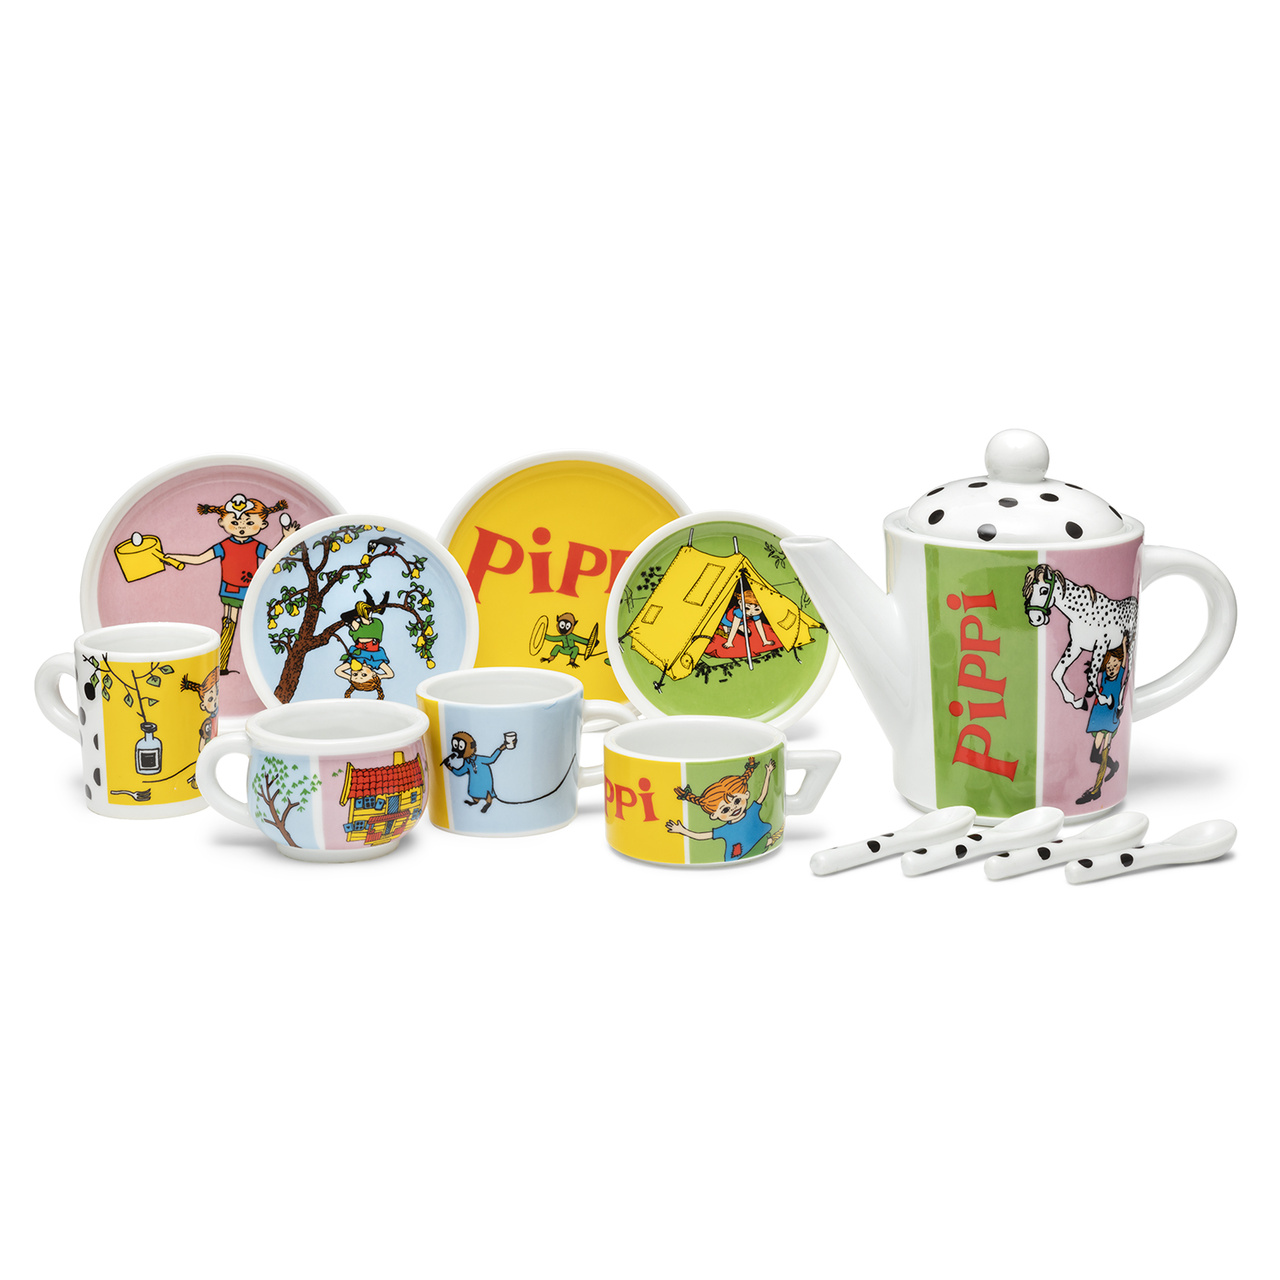 Play kitchens & toy kitchens pippi kids tea set